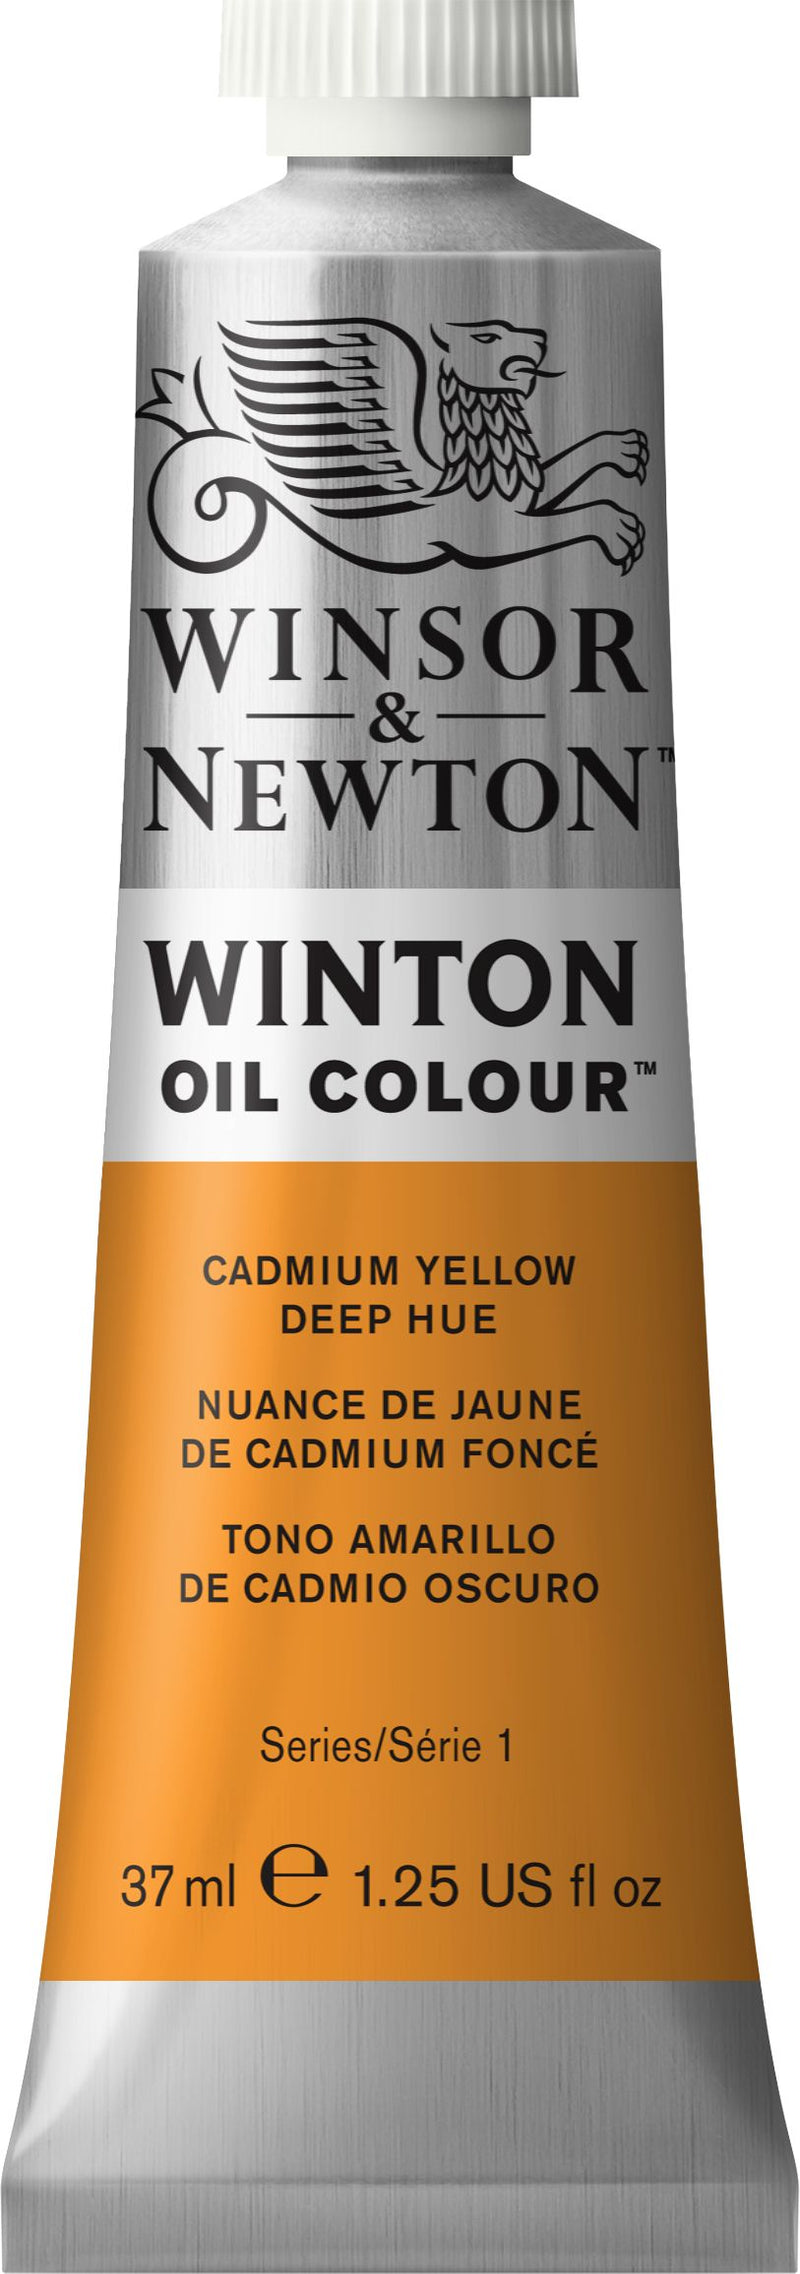 Winton Oil Colour Cadmium Yellow Deep Hue - 37ml tube